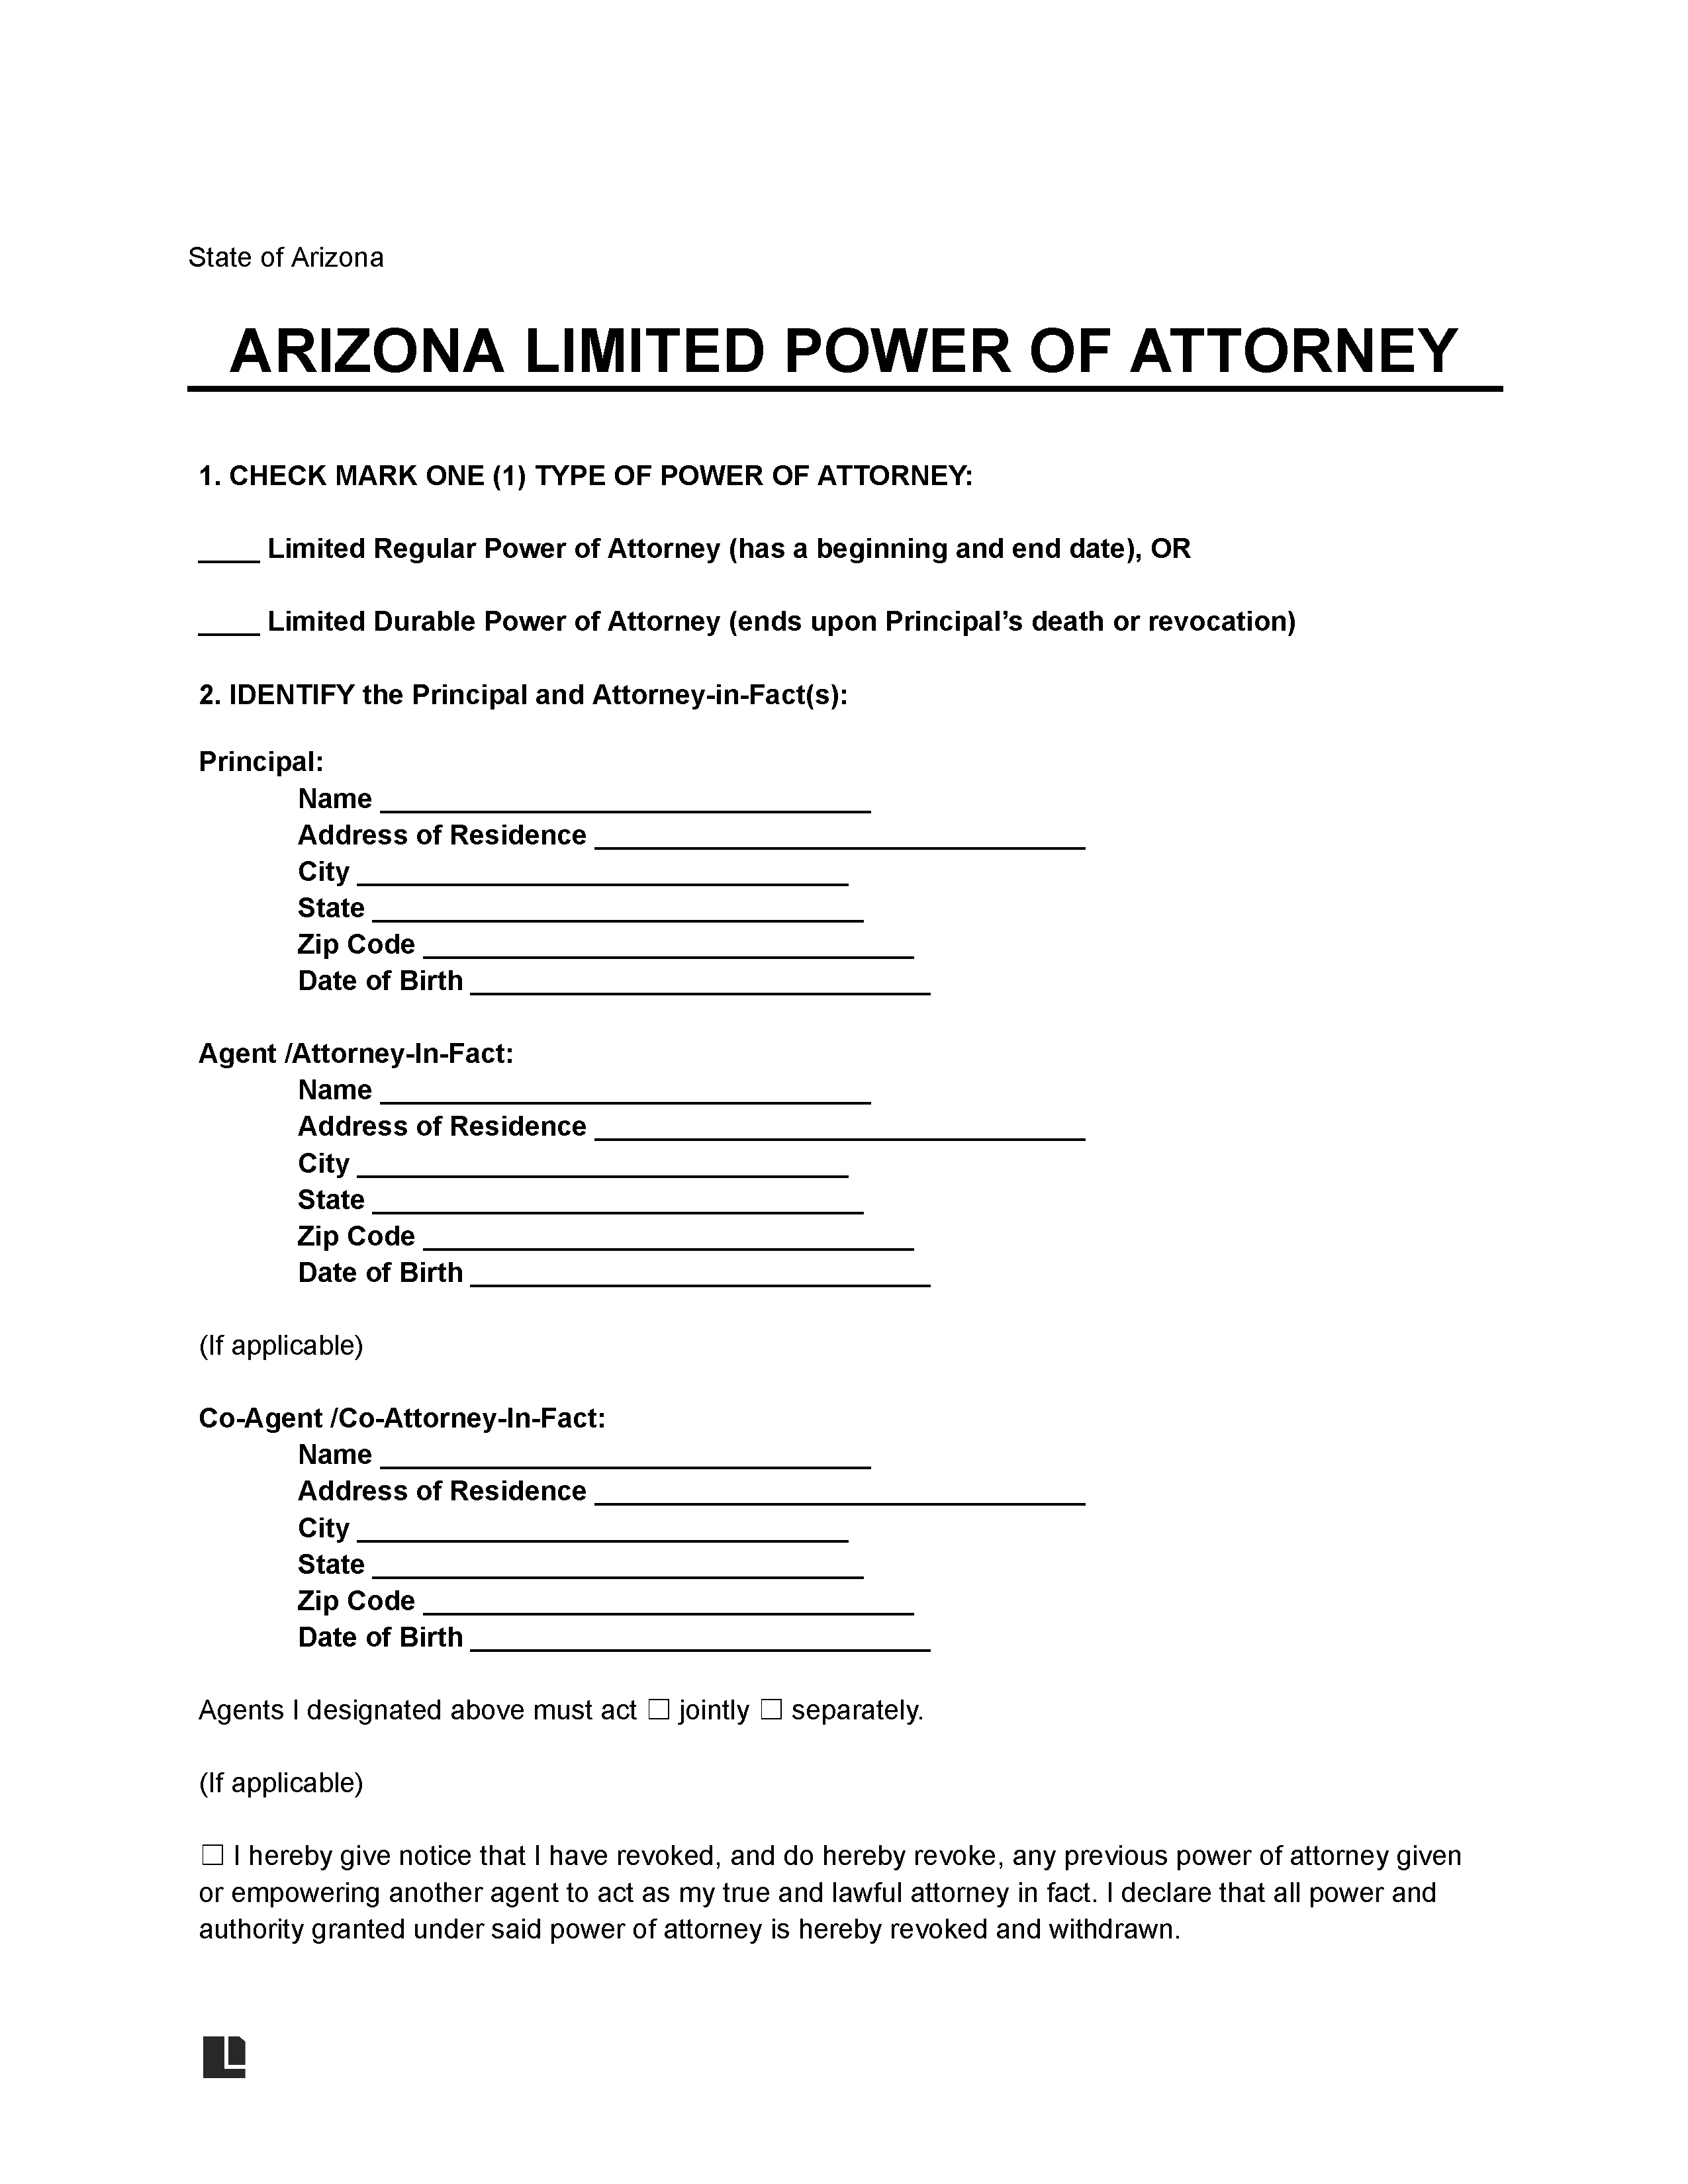 Arizona Limited Power of Attorney Form